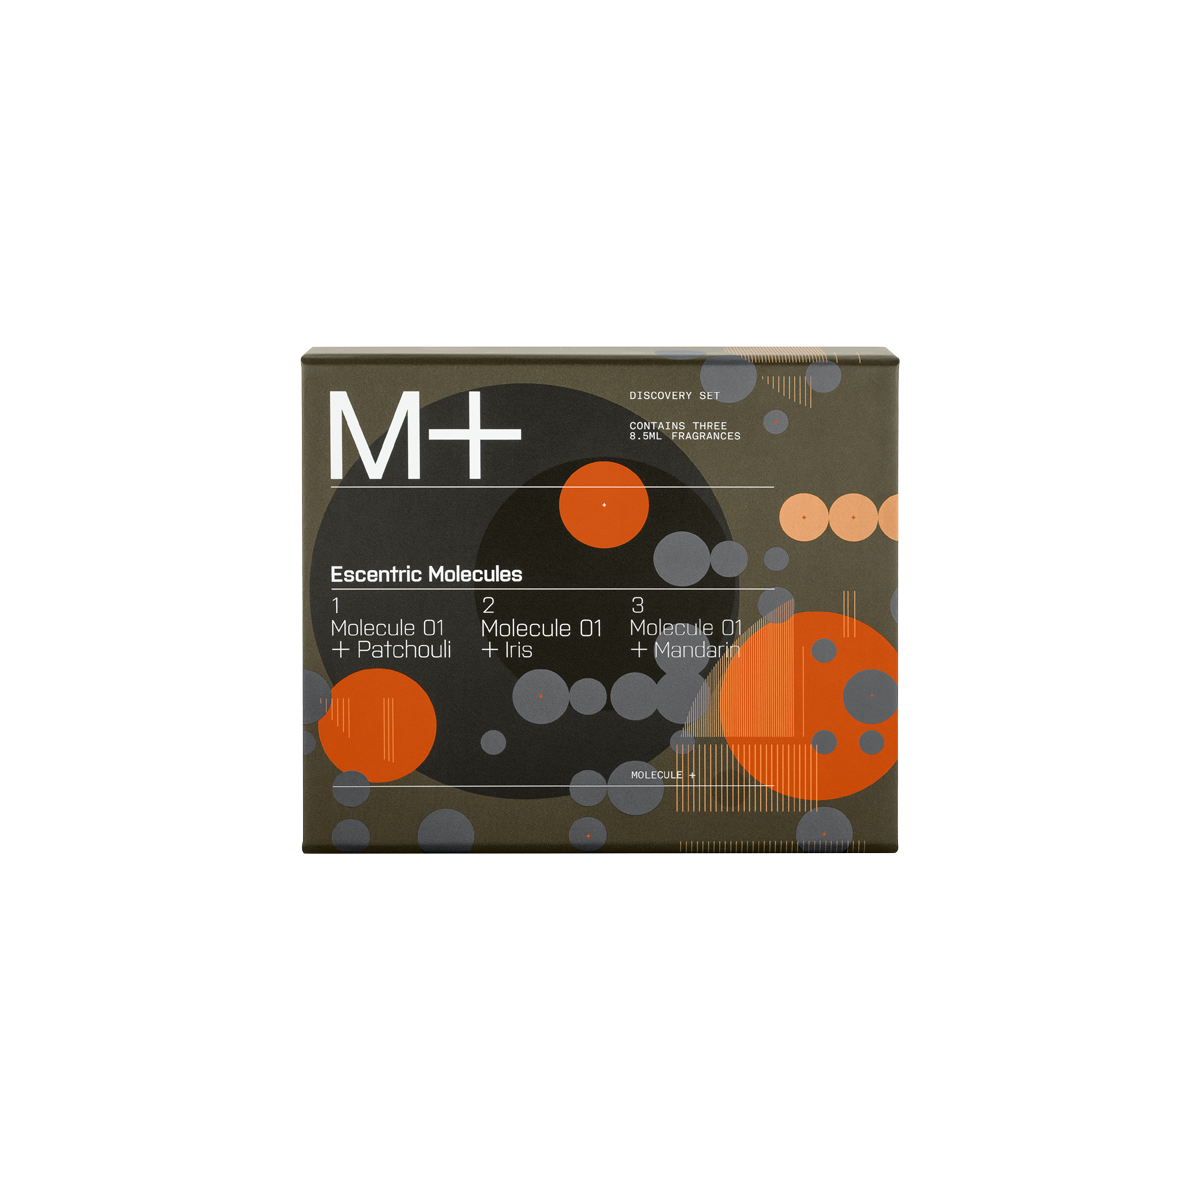 Escentric Molecules - Discovery Kit M+ Patchouli Iris Mandarin